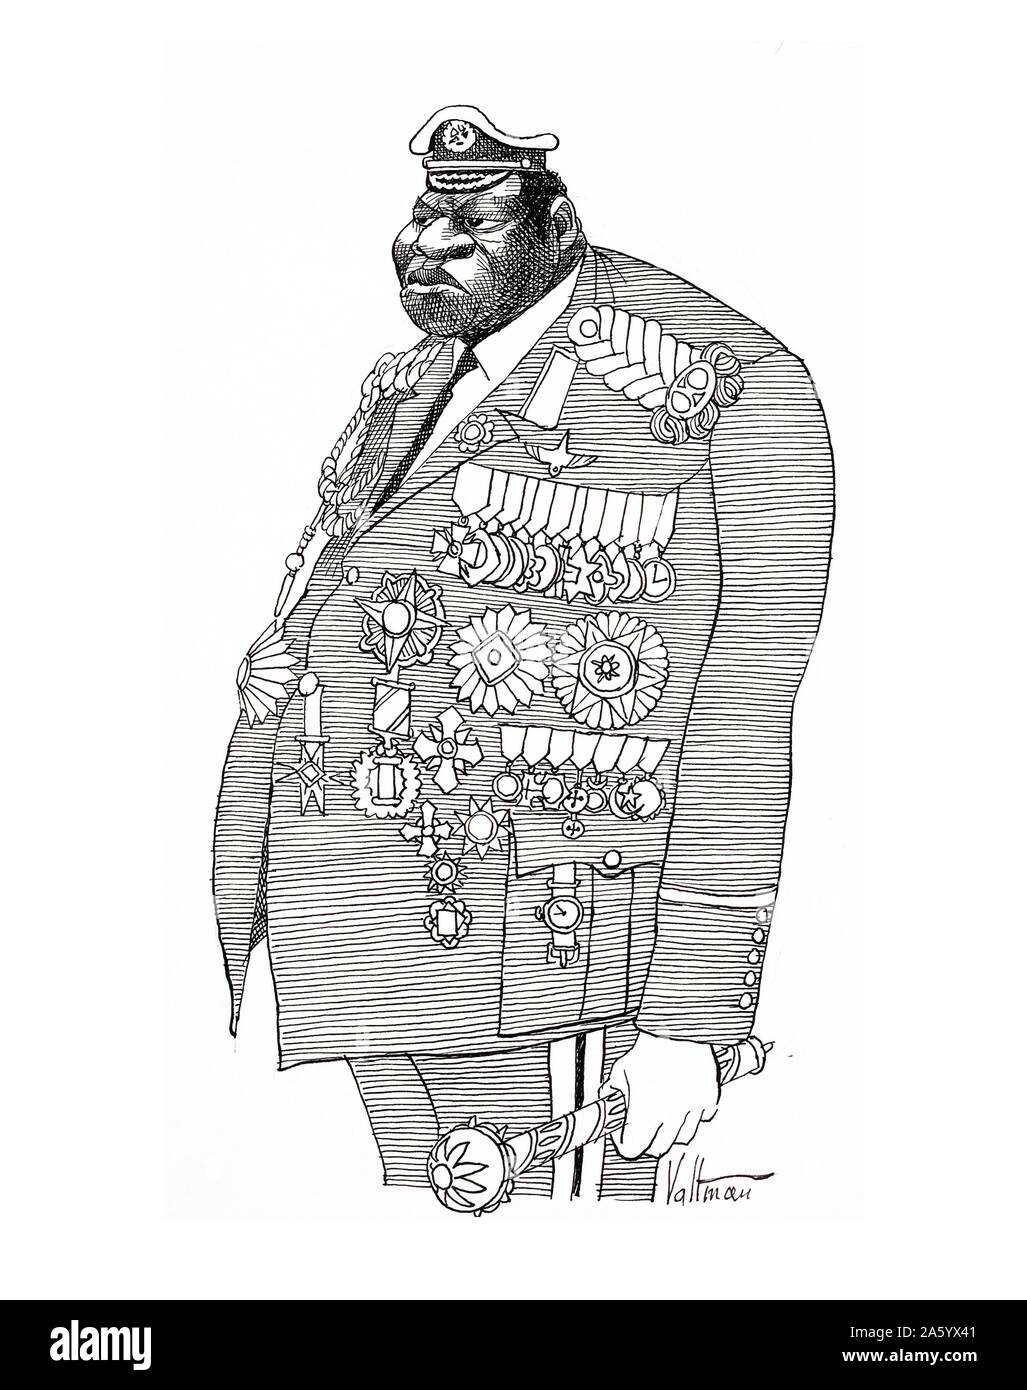 cartoon depicting Field Marshall, Idi Amin Dada (c. 1925 – 16 August 2003) President of Uganda, from 1971 to 1979. Stock Photo